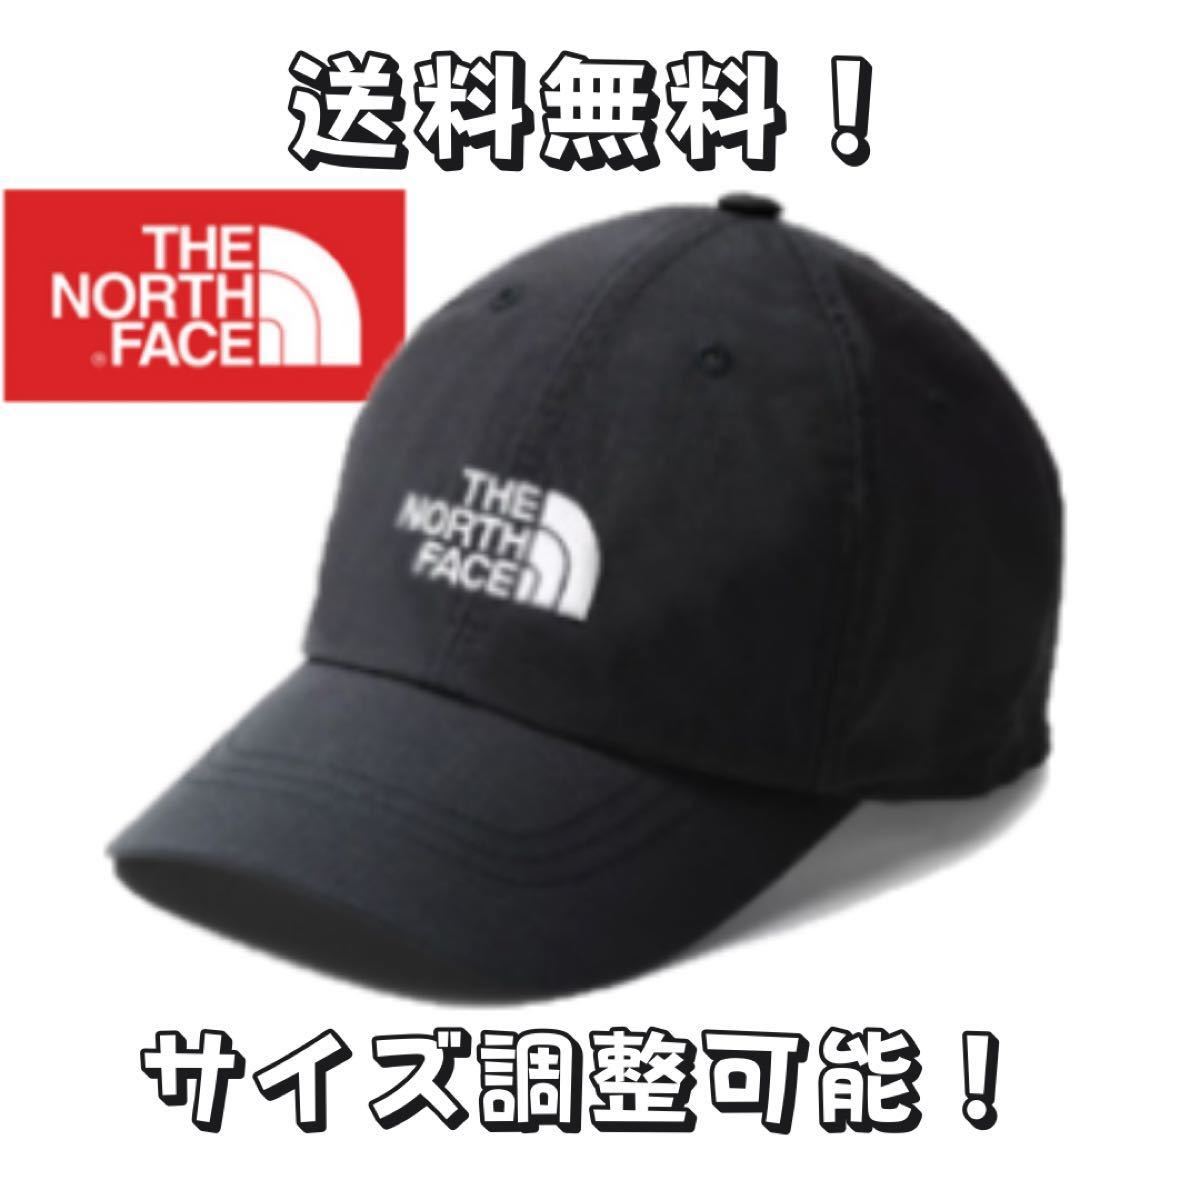 THE NORTH FACE ザノースフェイス キャップ帽子 HORIZON BALL Logo FREE 未発売 ハーフドーム 